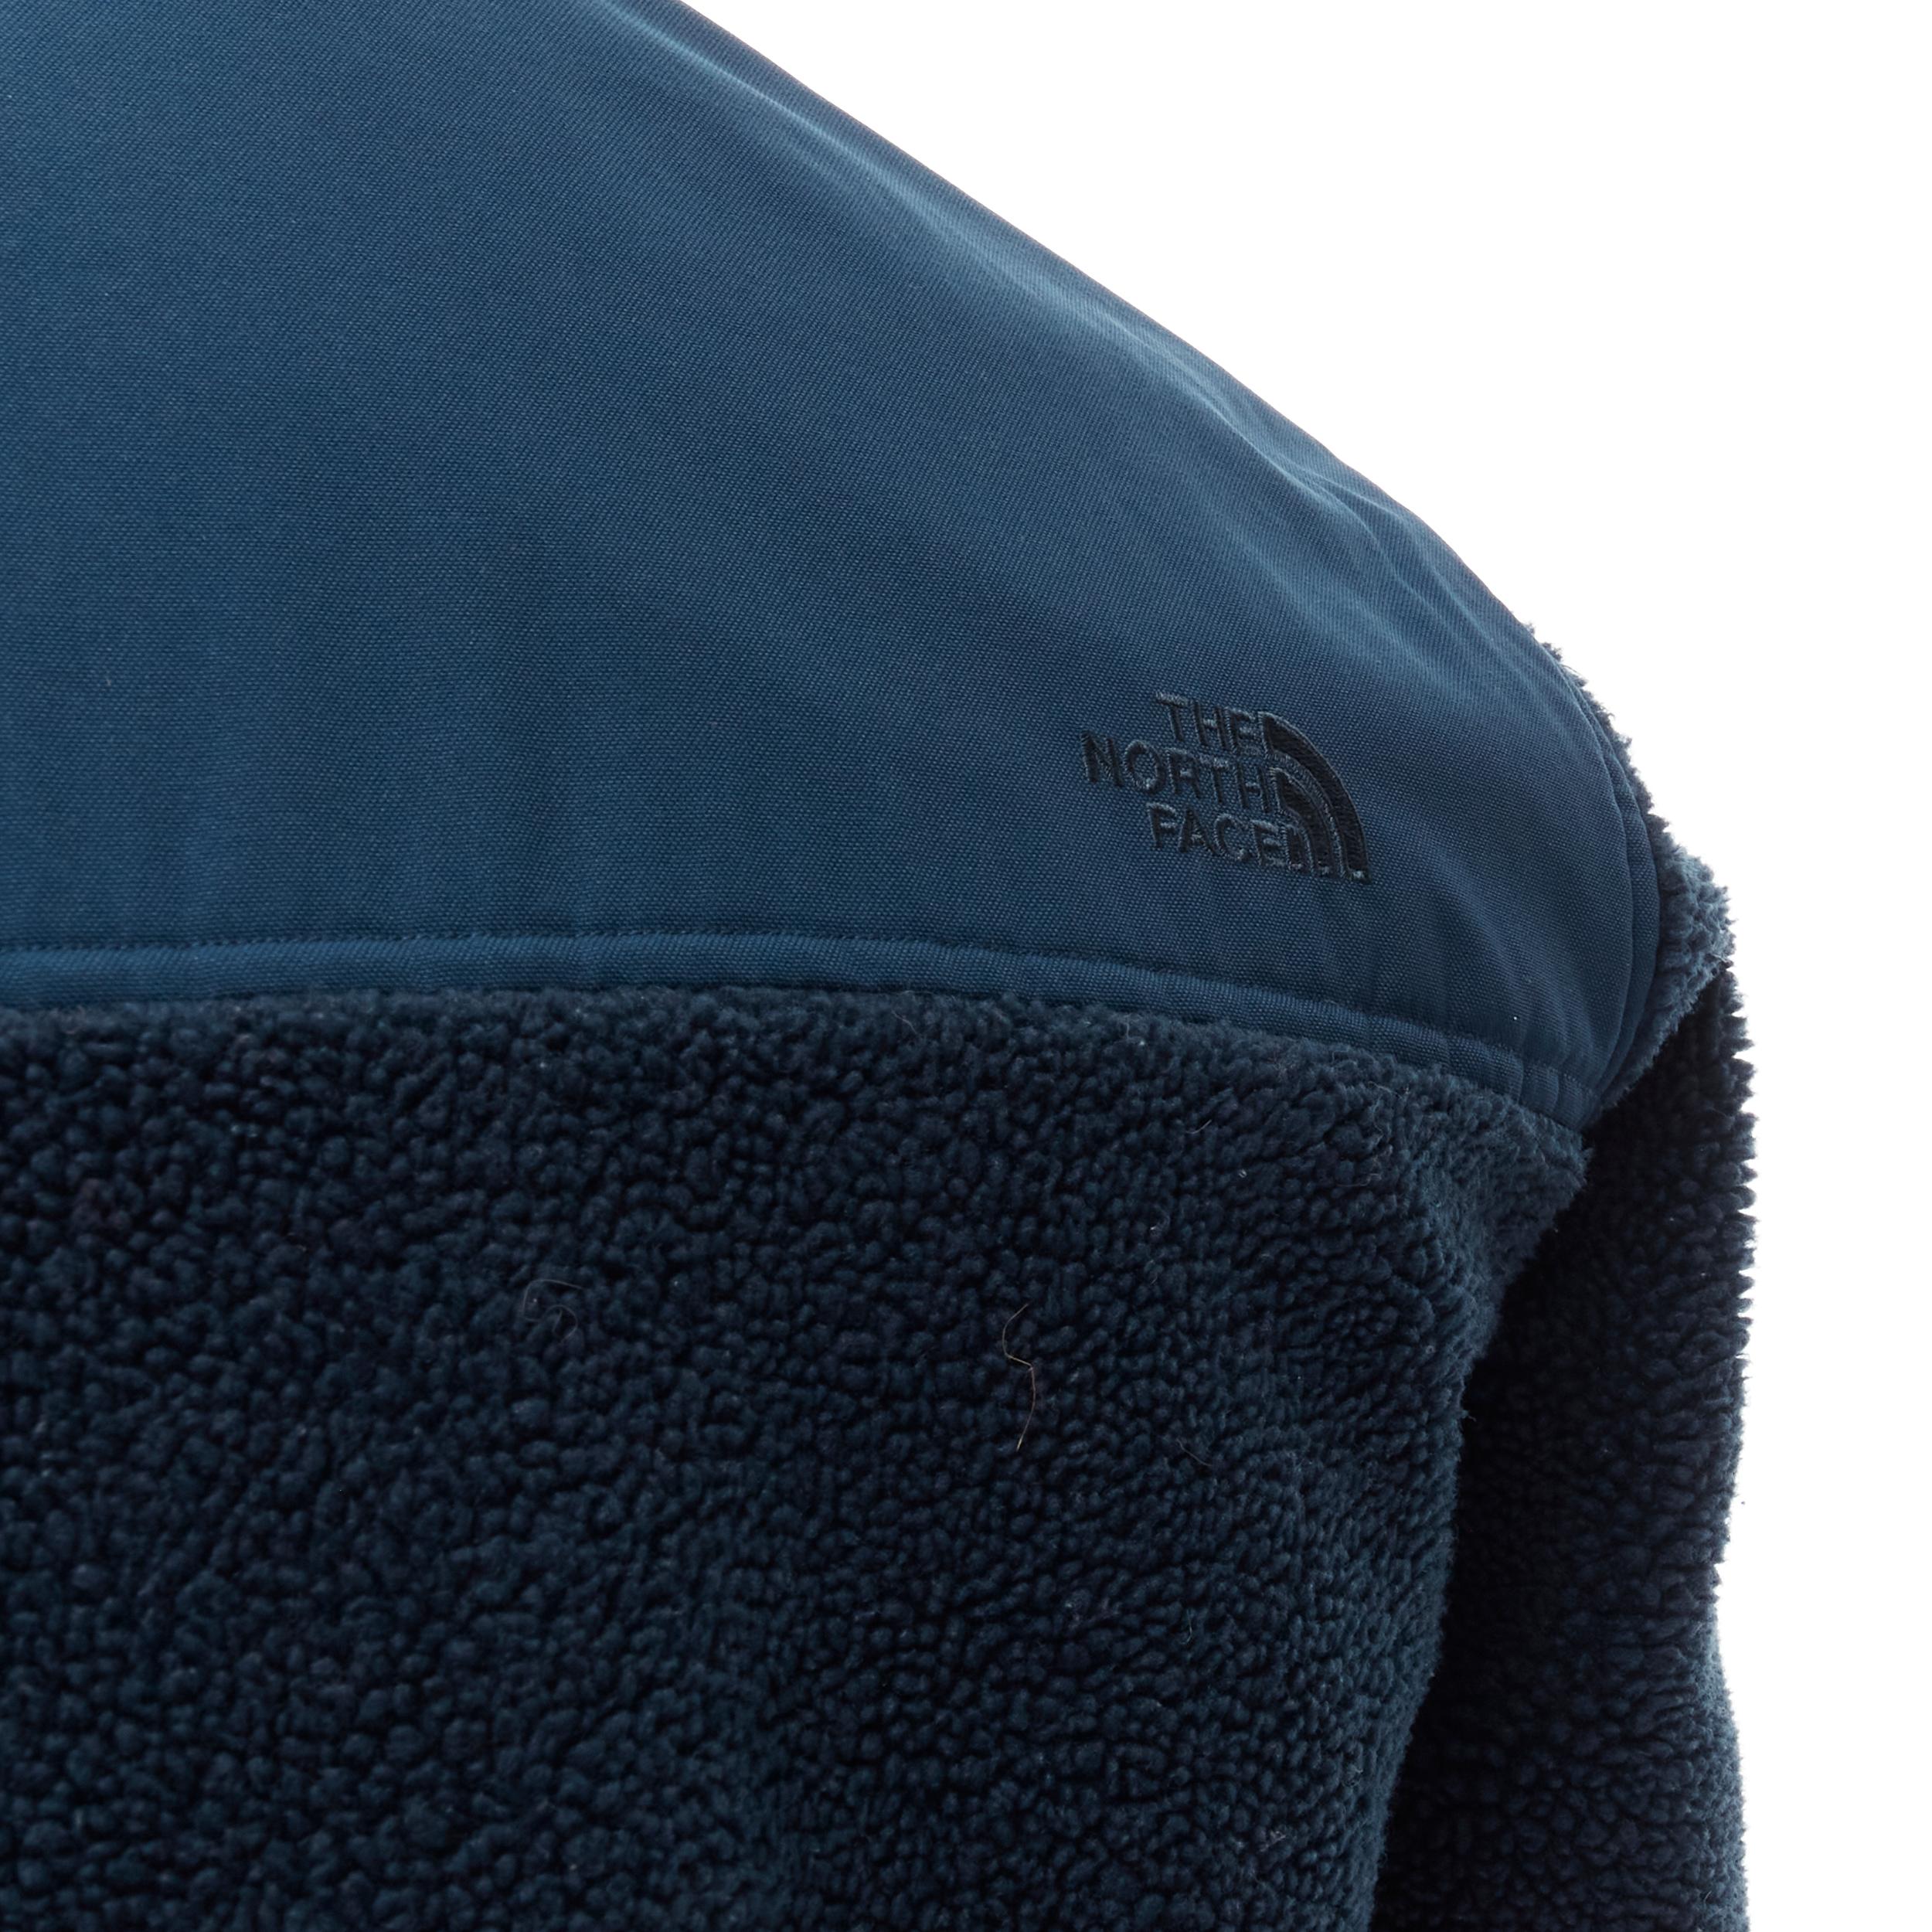 NORTH FACE navy blue fleece patch flap pocket asymmetric zip up jacket XS S For Sale 3